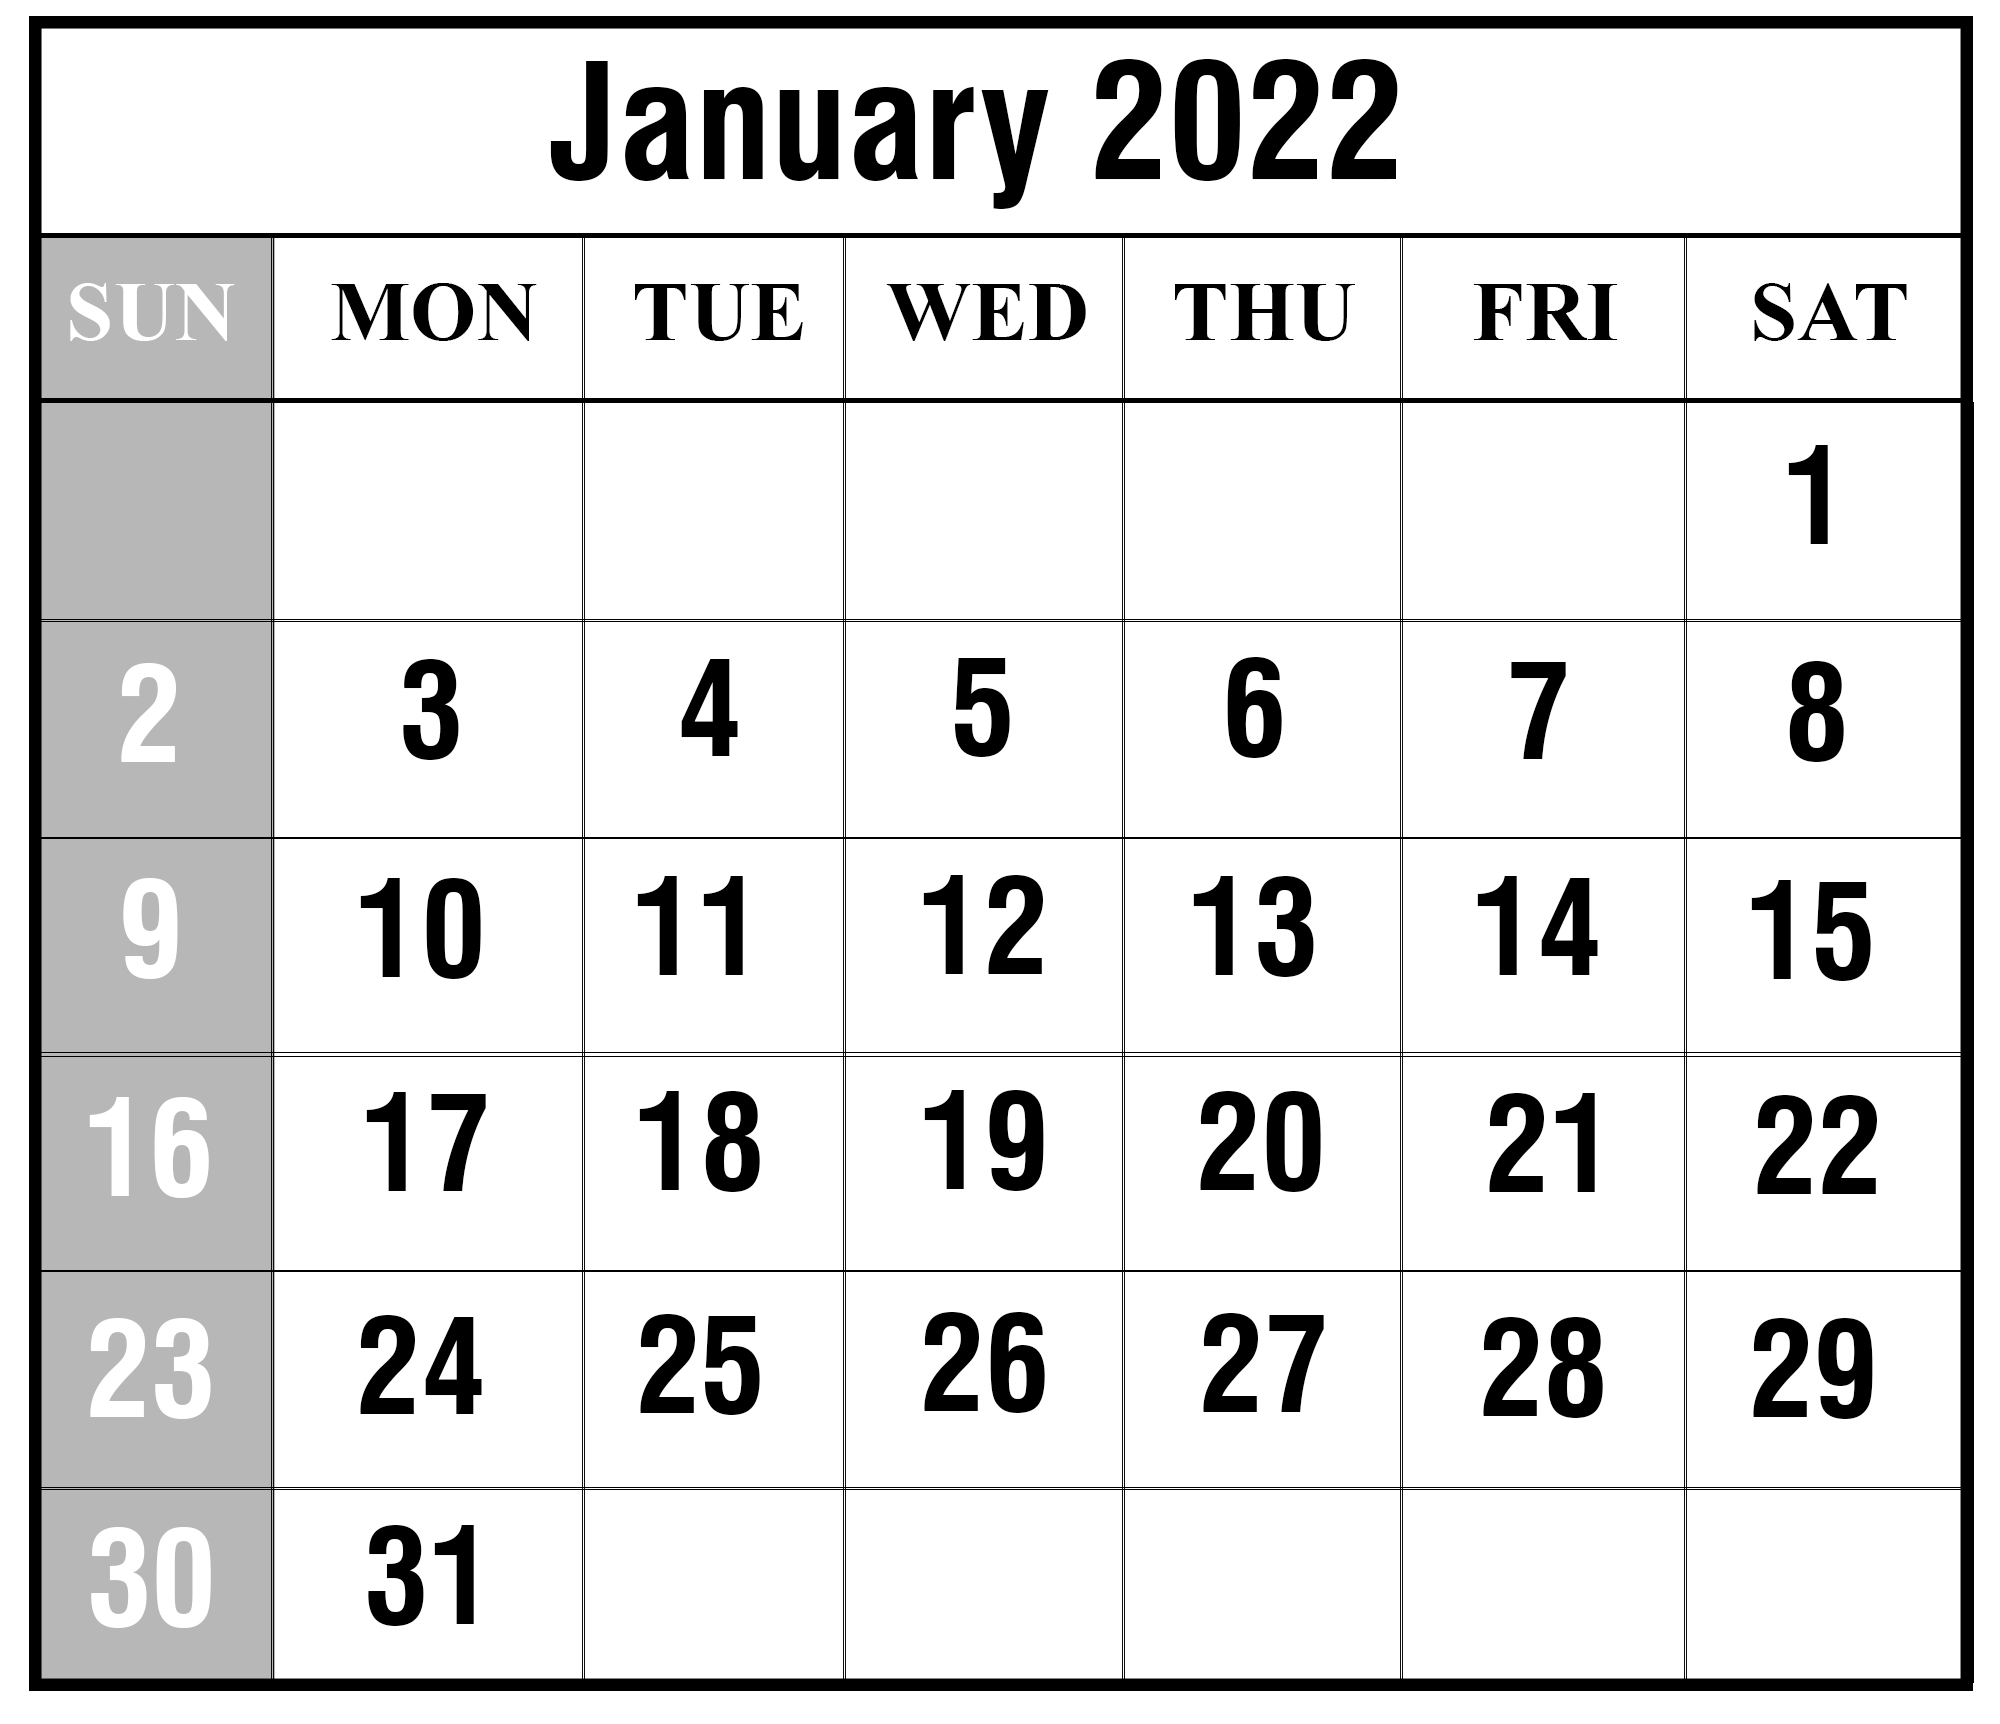 Catch Calendar January 2022 To Print